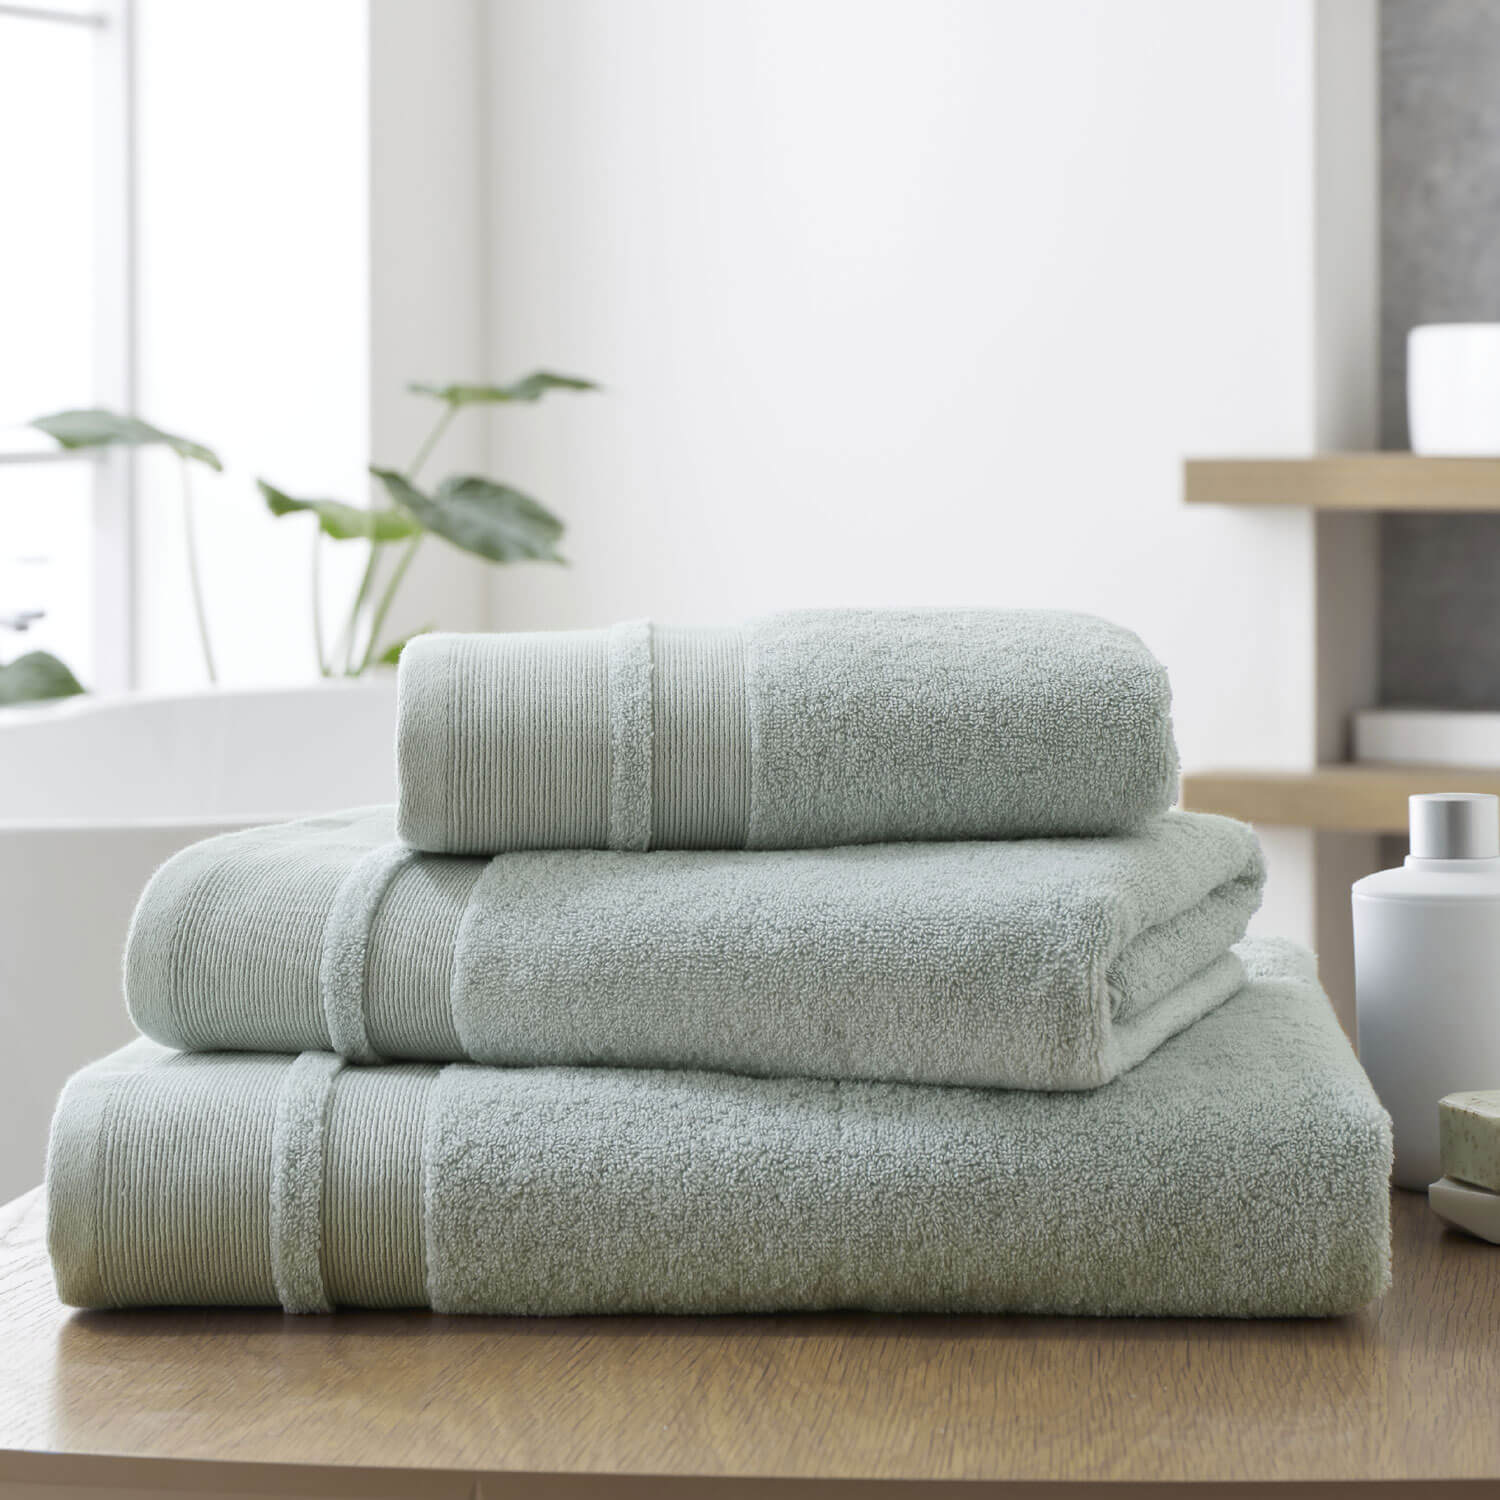 Dorma Zero Twist Cotton Modal Towel - Seafoam 1 Shaws Department Stores